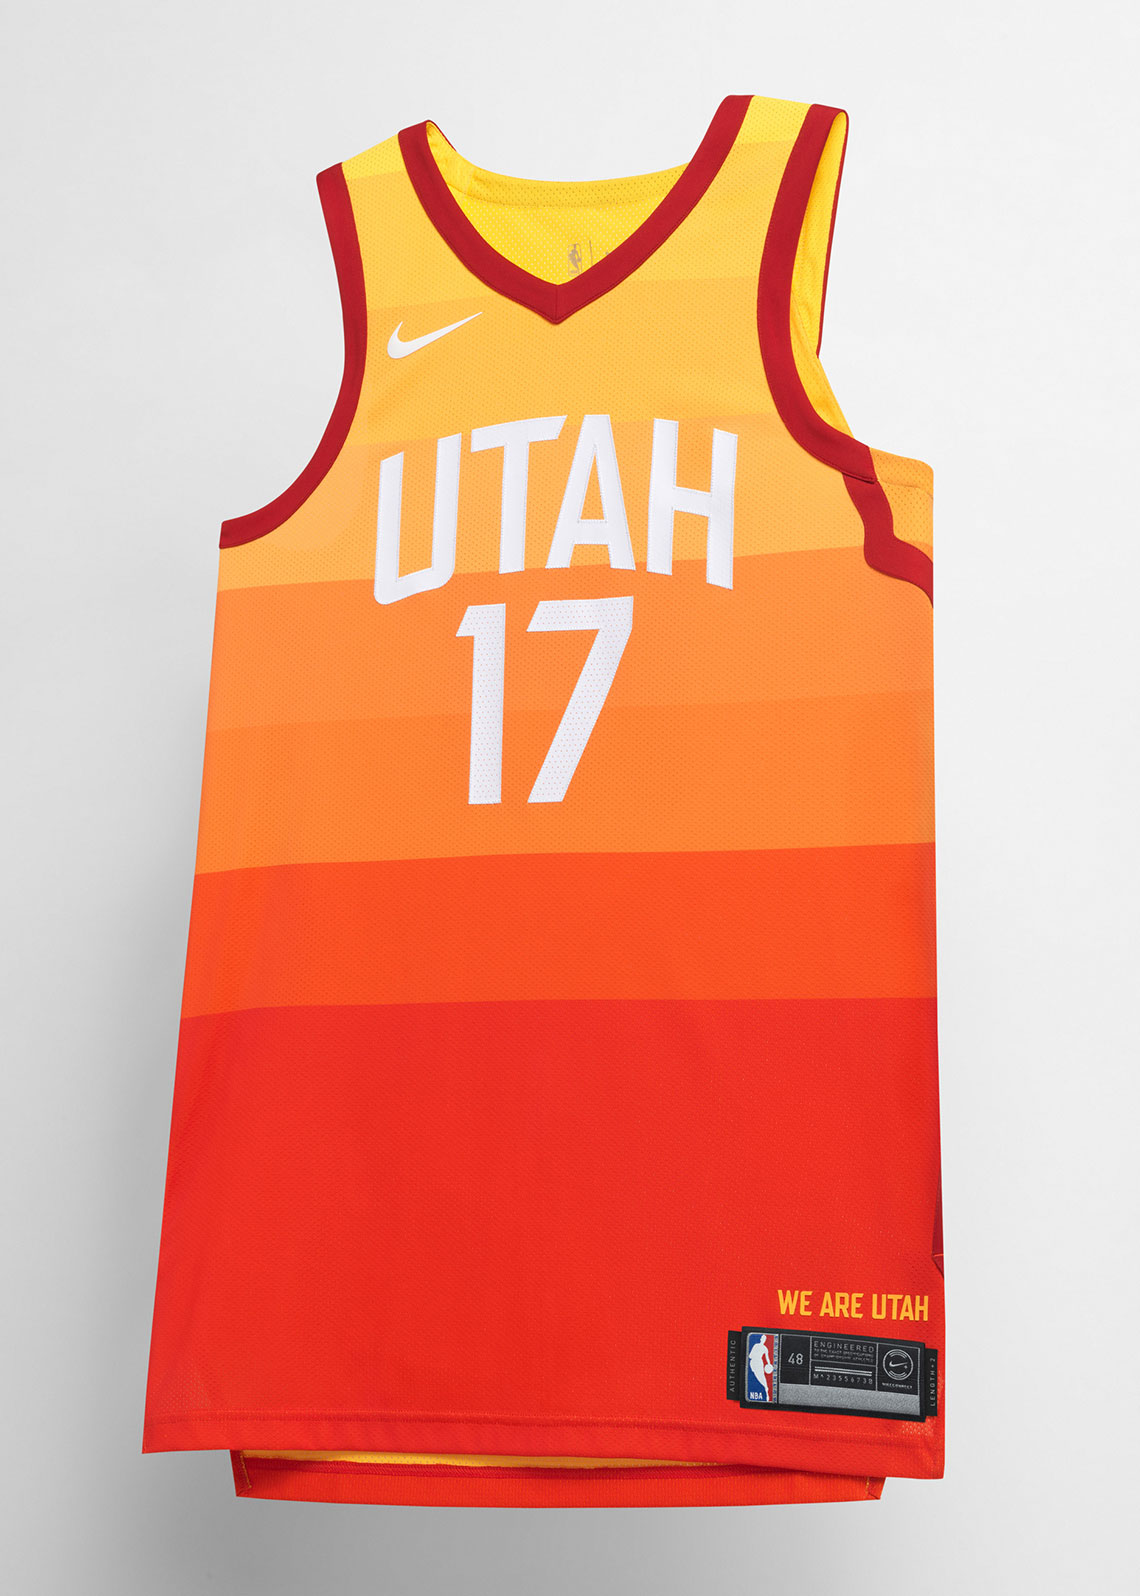 Nba City Edition Uniforms Utah Jazz